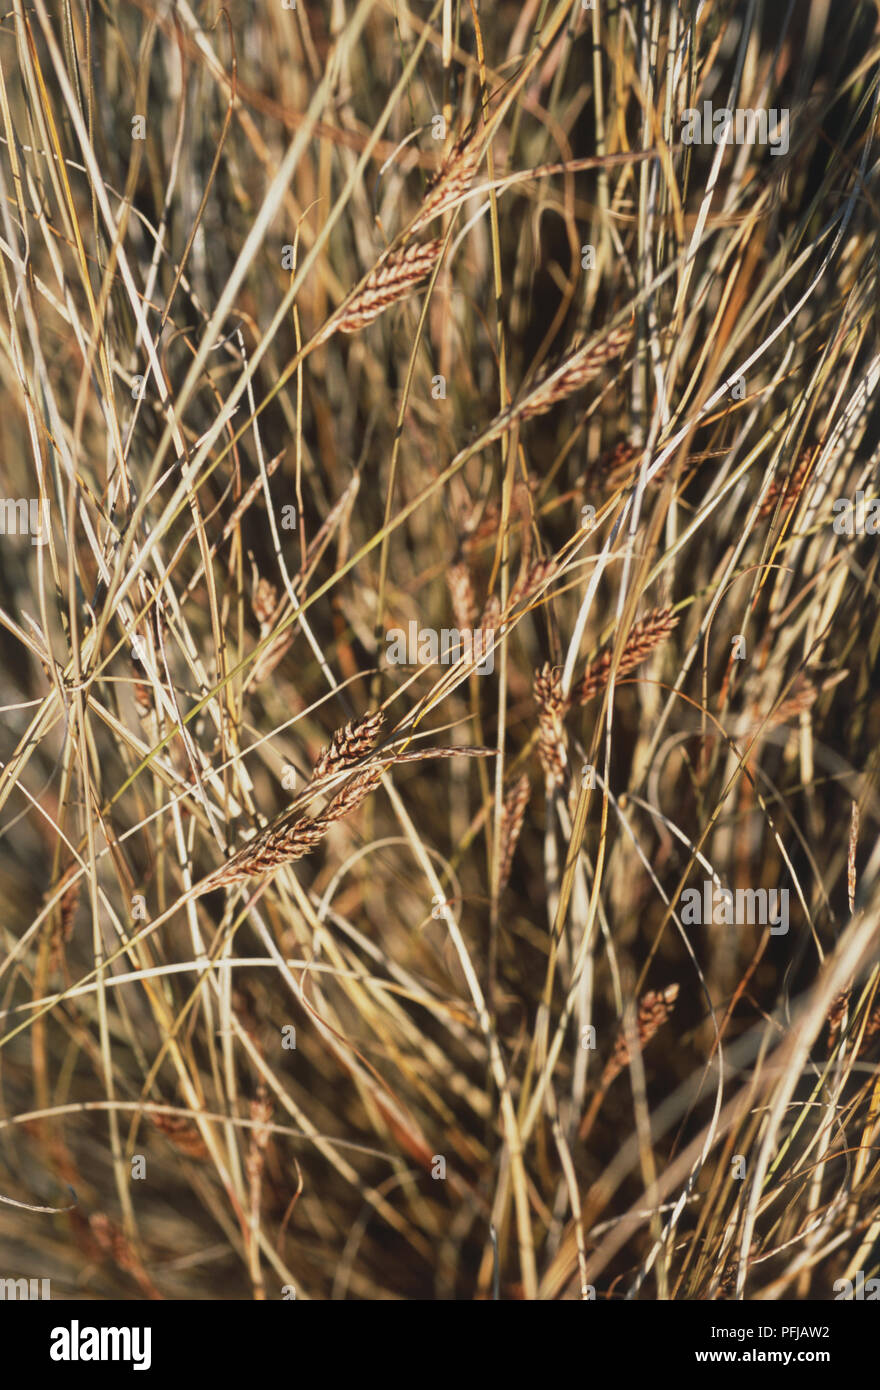 Carex comans, Sedge Stock Photo